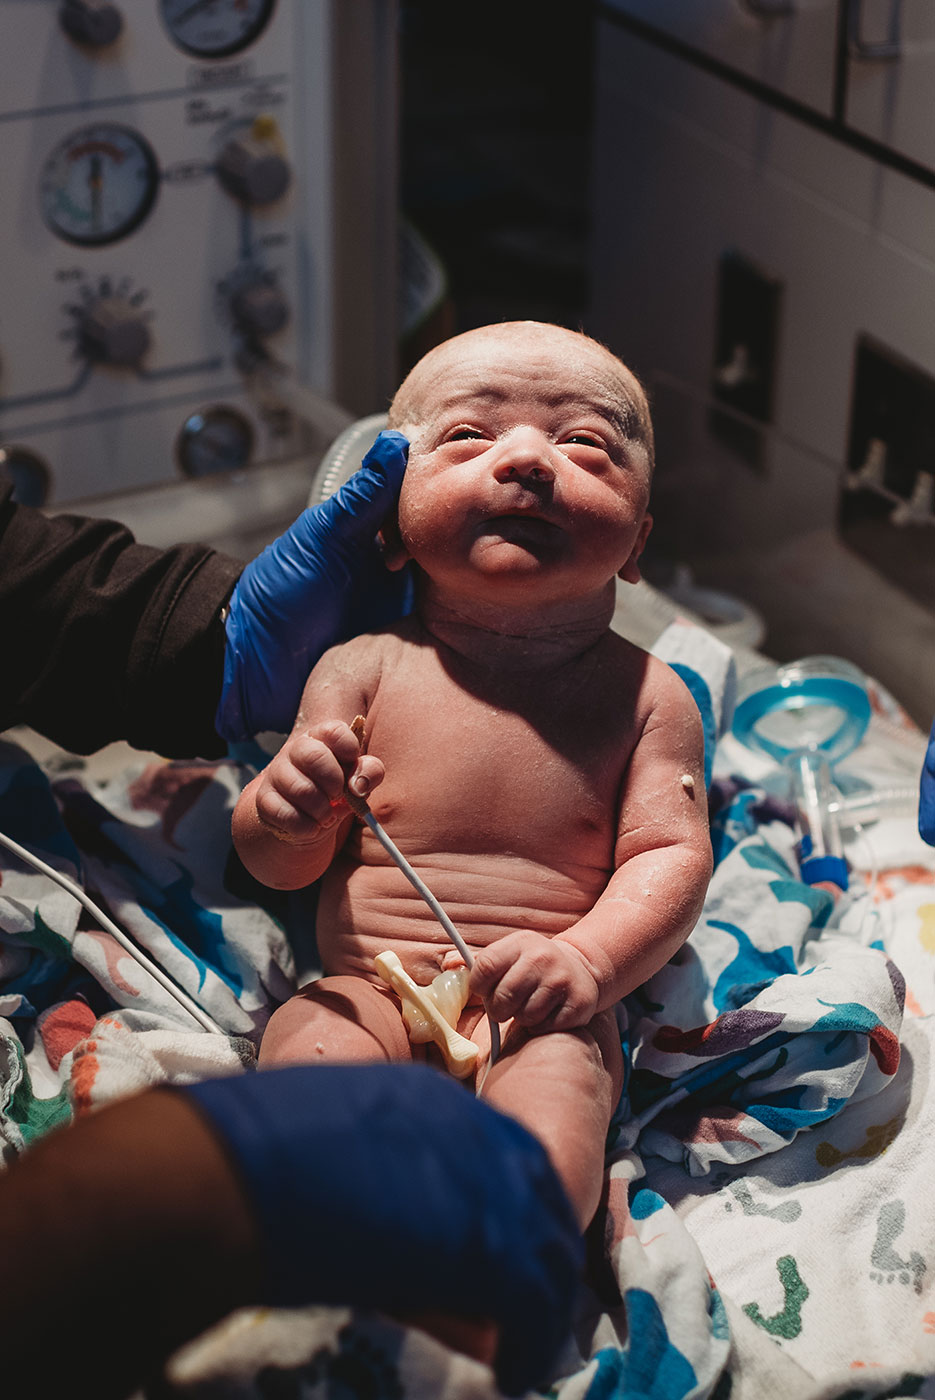 newborn baby boy opening his eyes